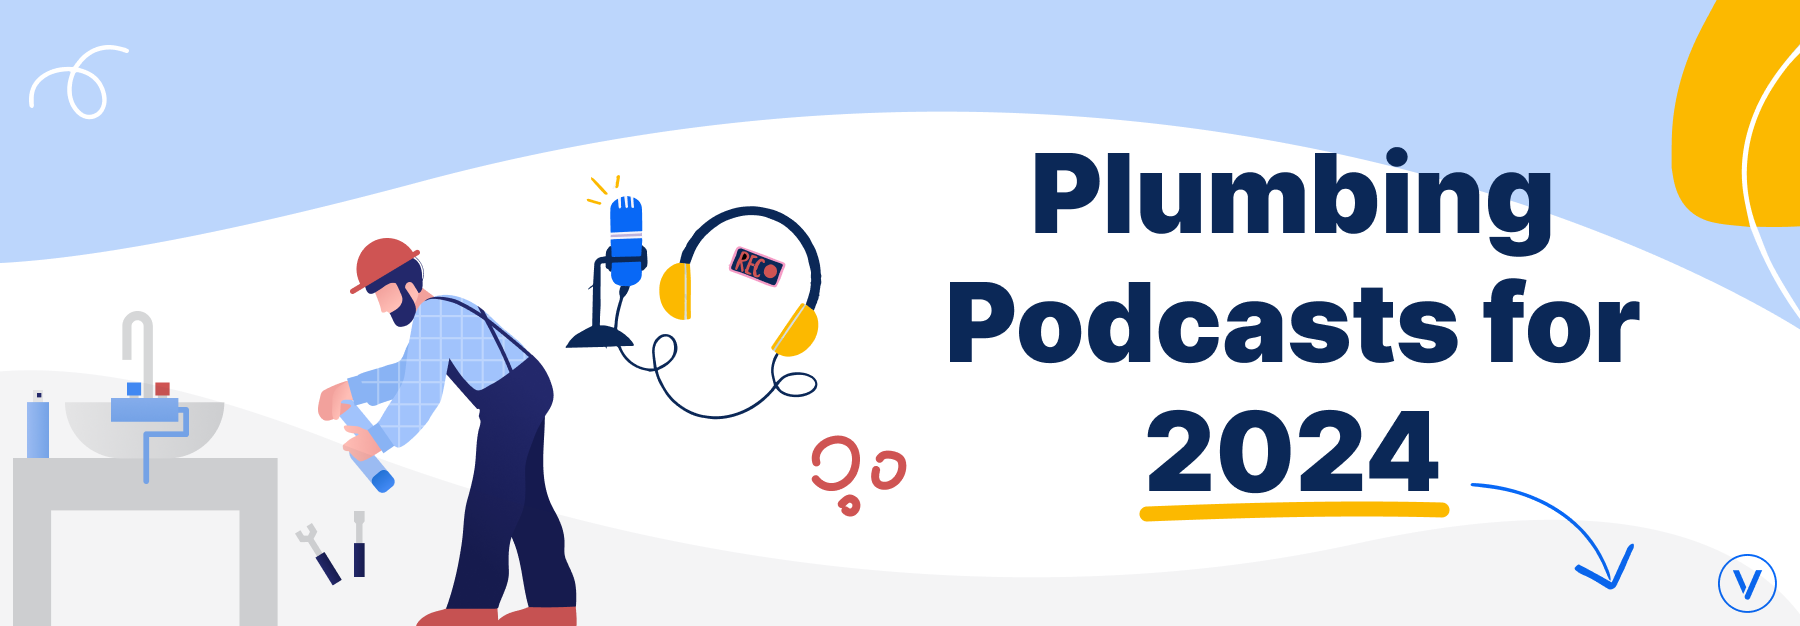 Plumbing Podcasts